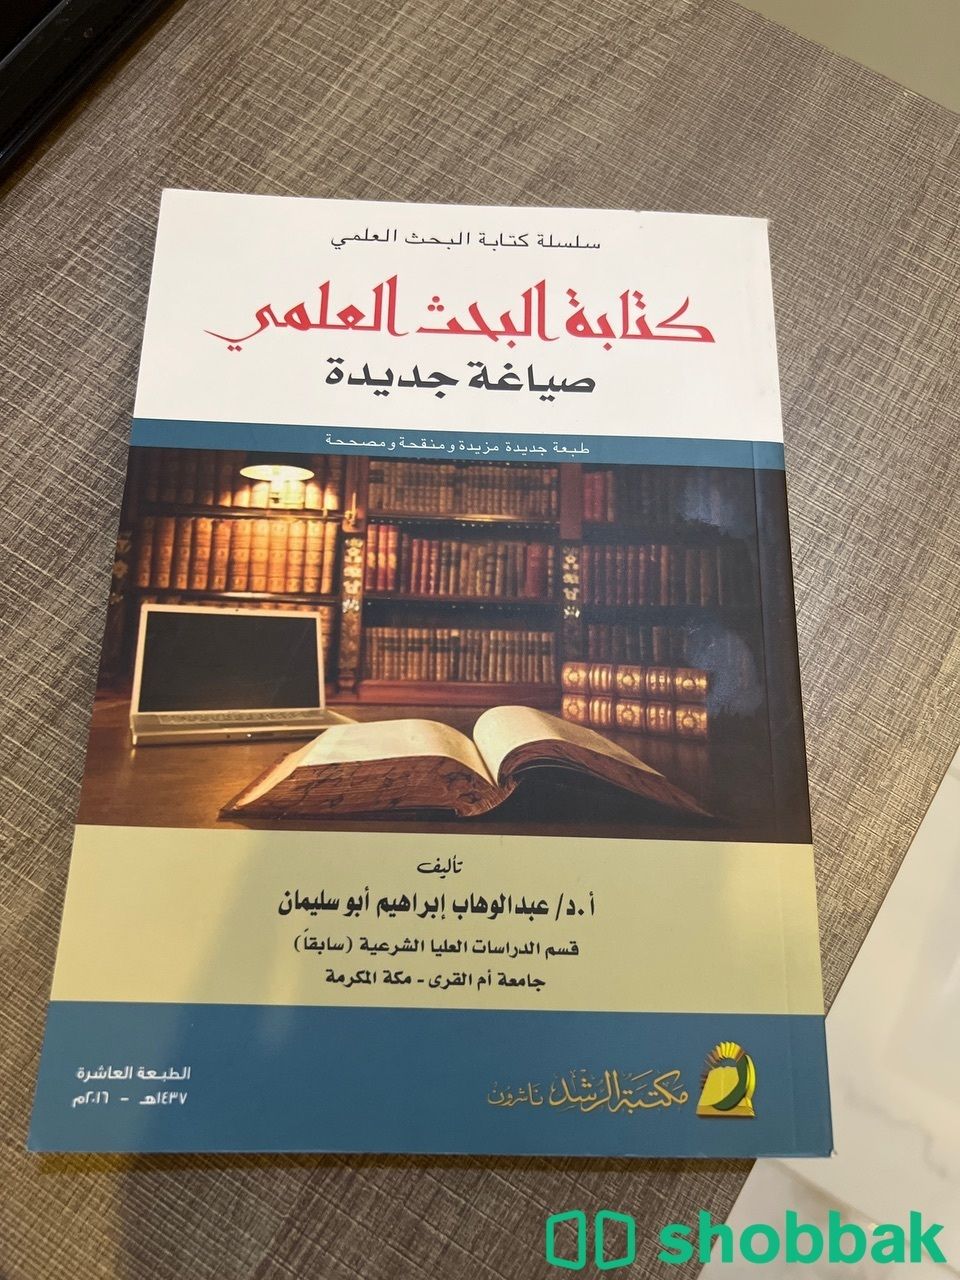 كتاب جديد🛑 Shobbak Saudi Arabia